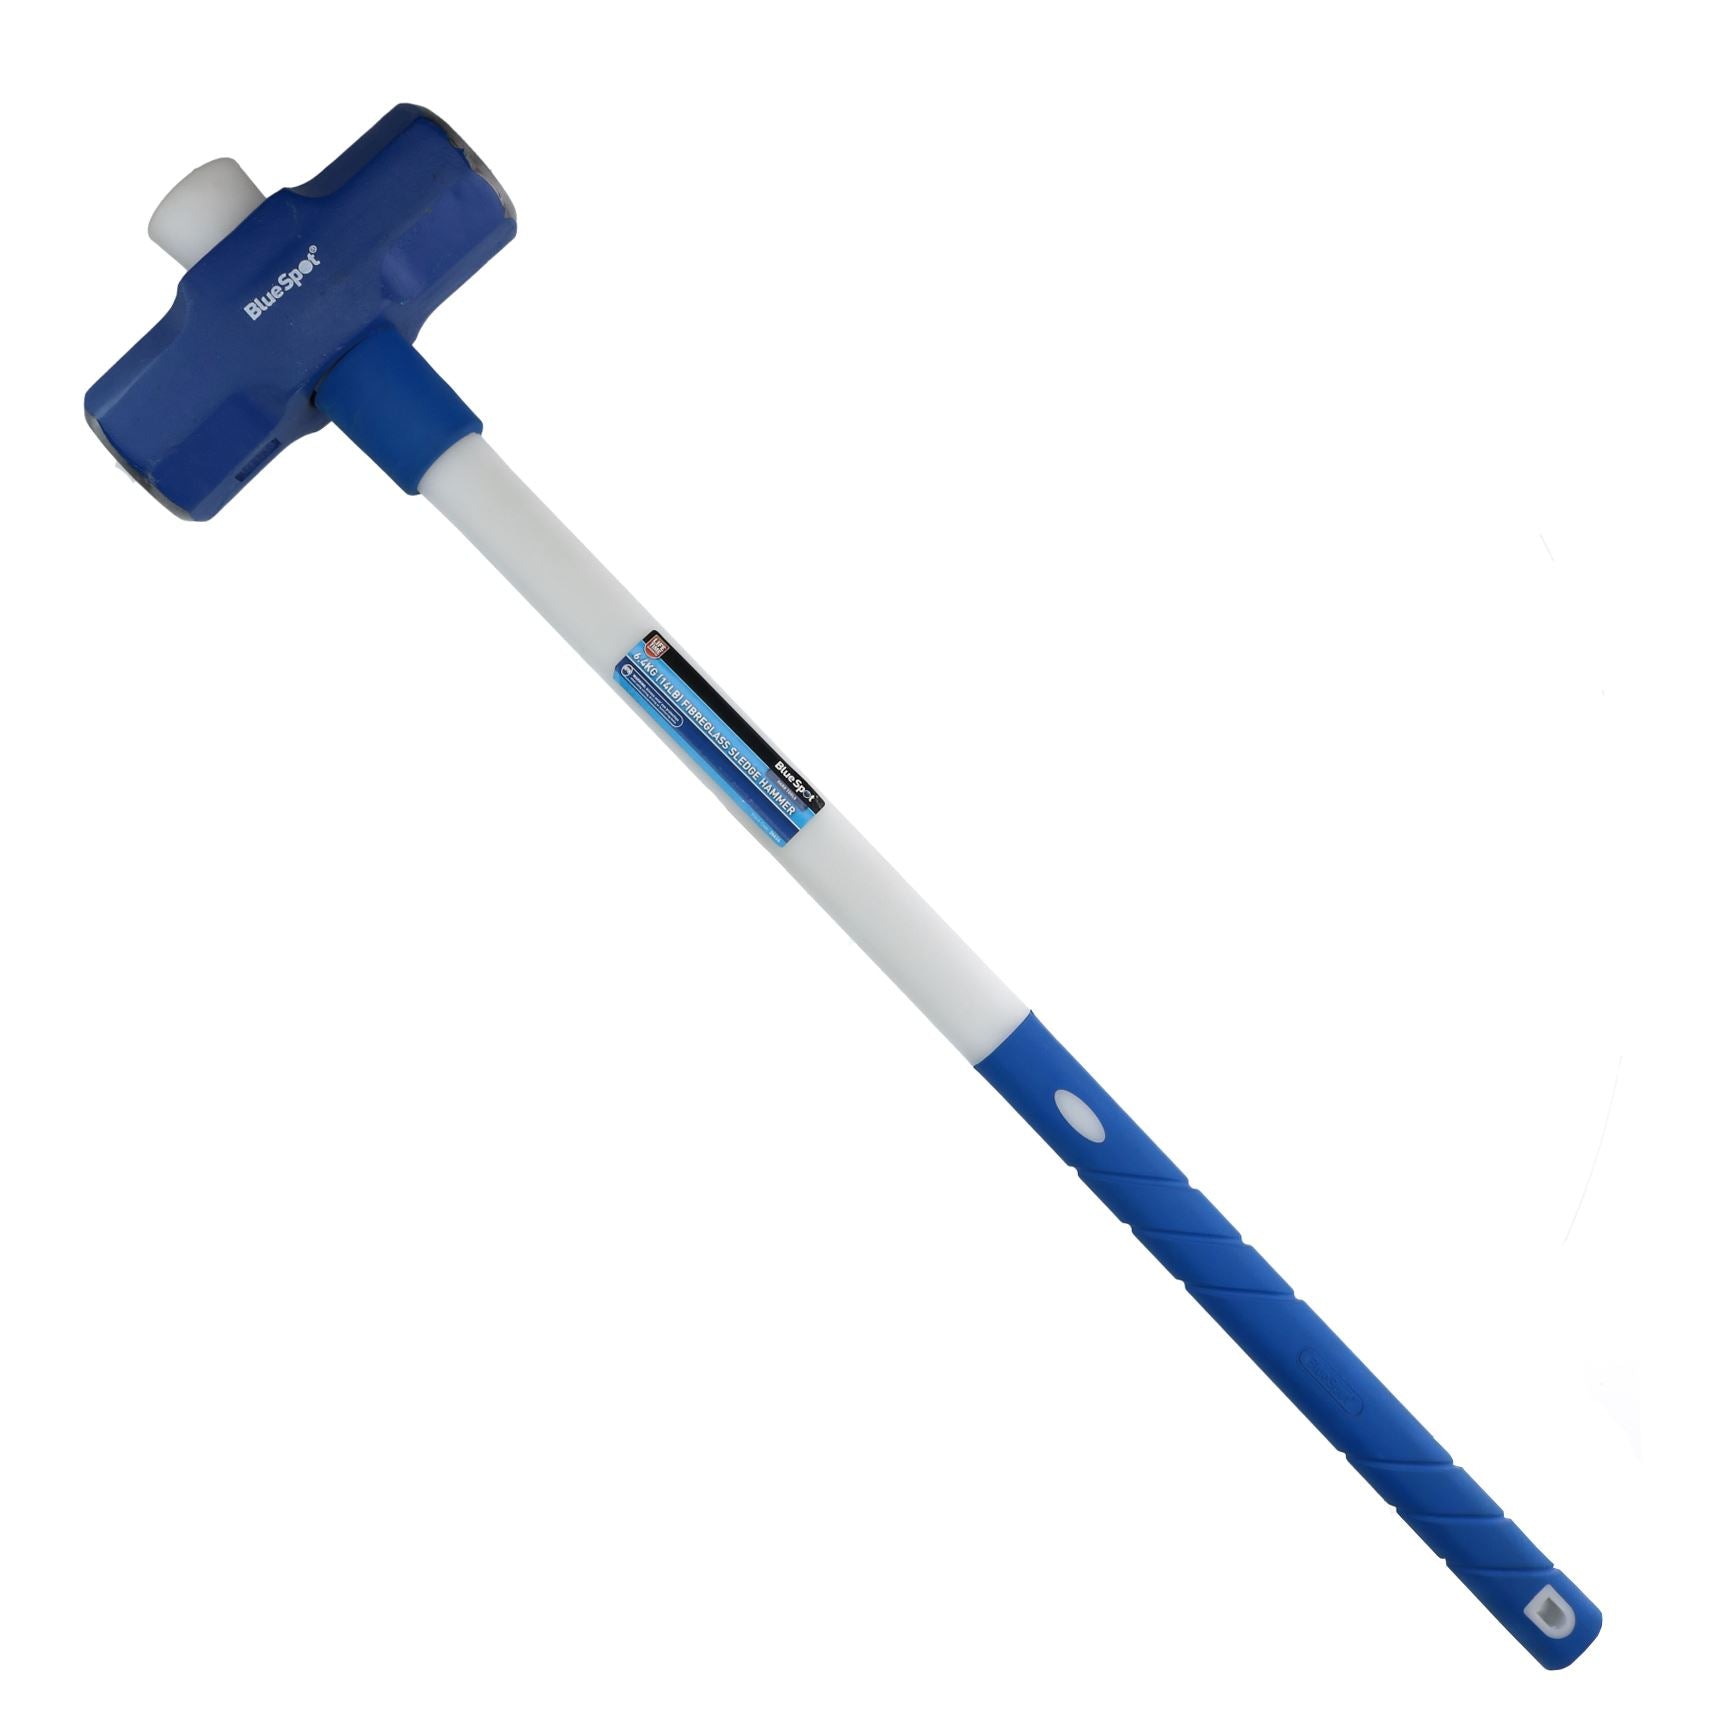 14Lb / 6.4kg Sledge Hammer With Fibreglass TPR Handle Demolition Post Driving